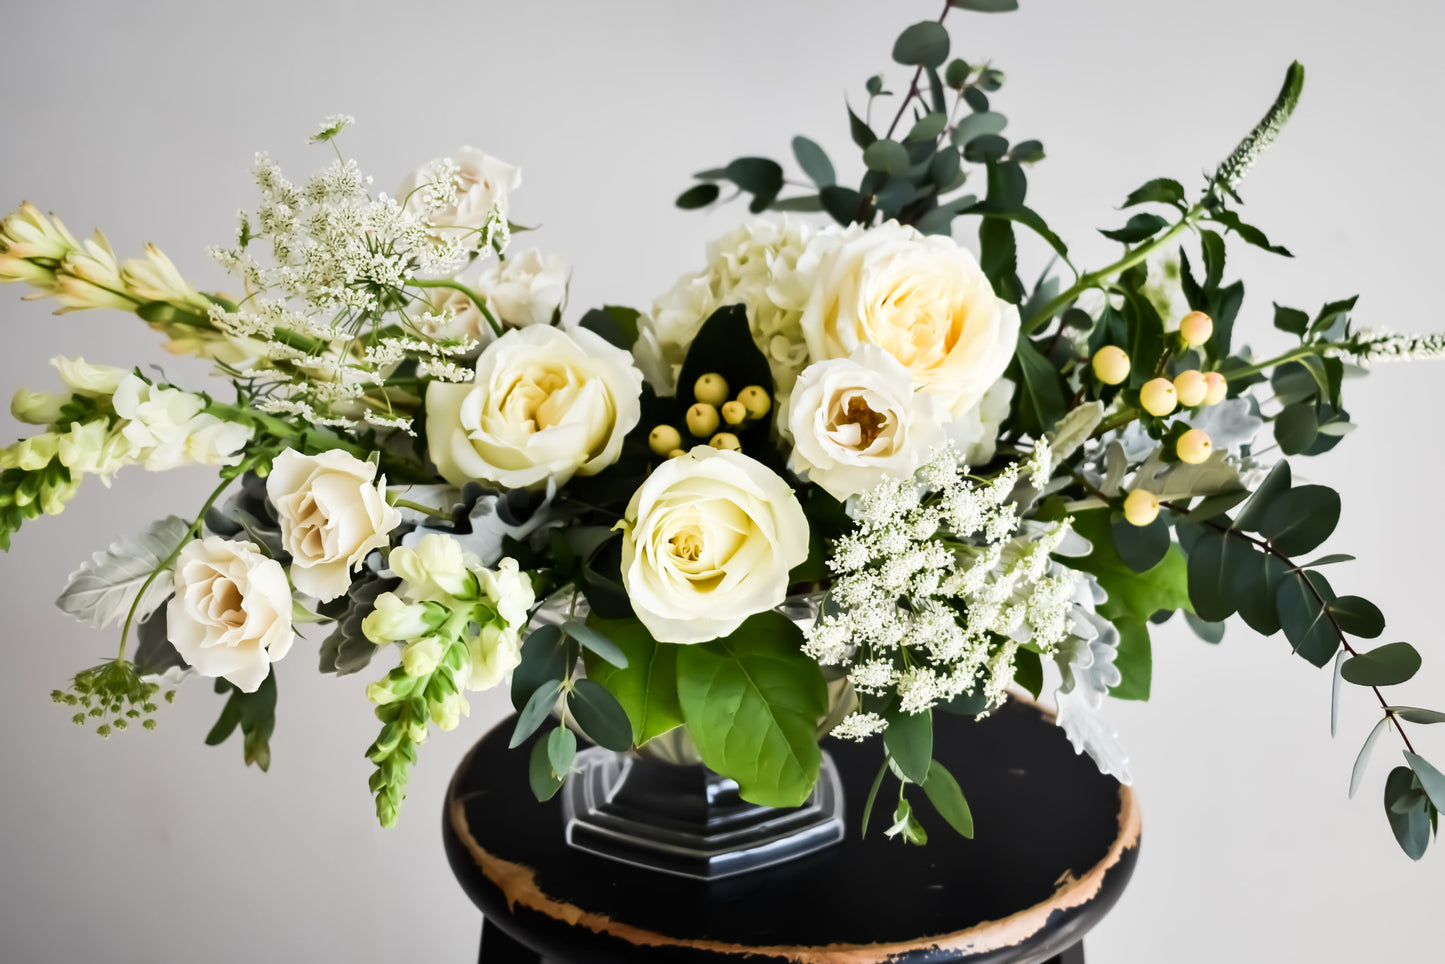 Fancy white roses floral arrangement in clear vase